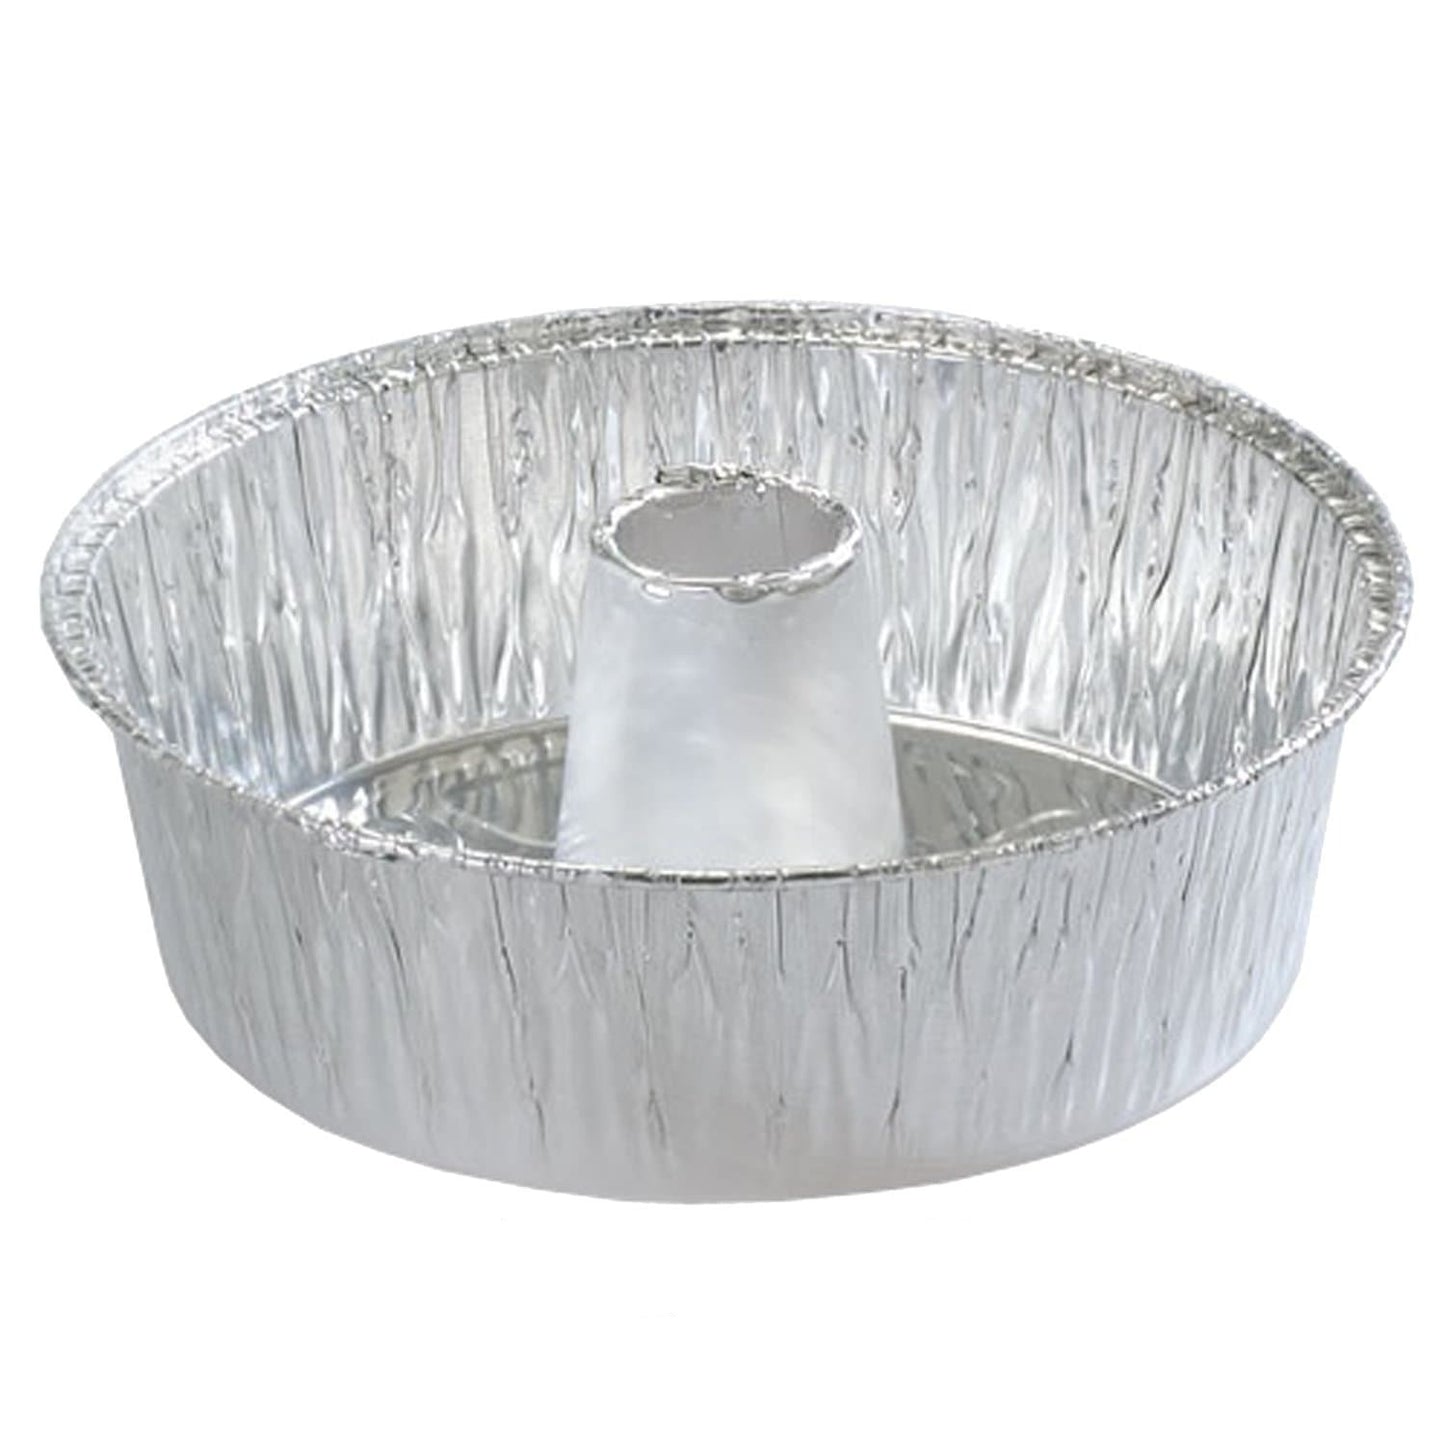 Angel-Food Cake Foil Pan with Plastic Lid - #4060